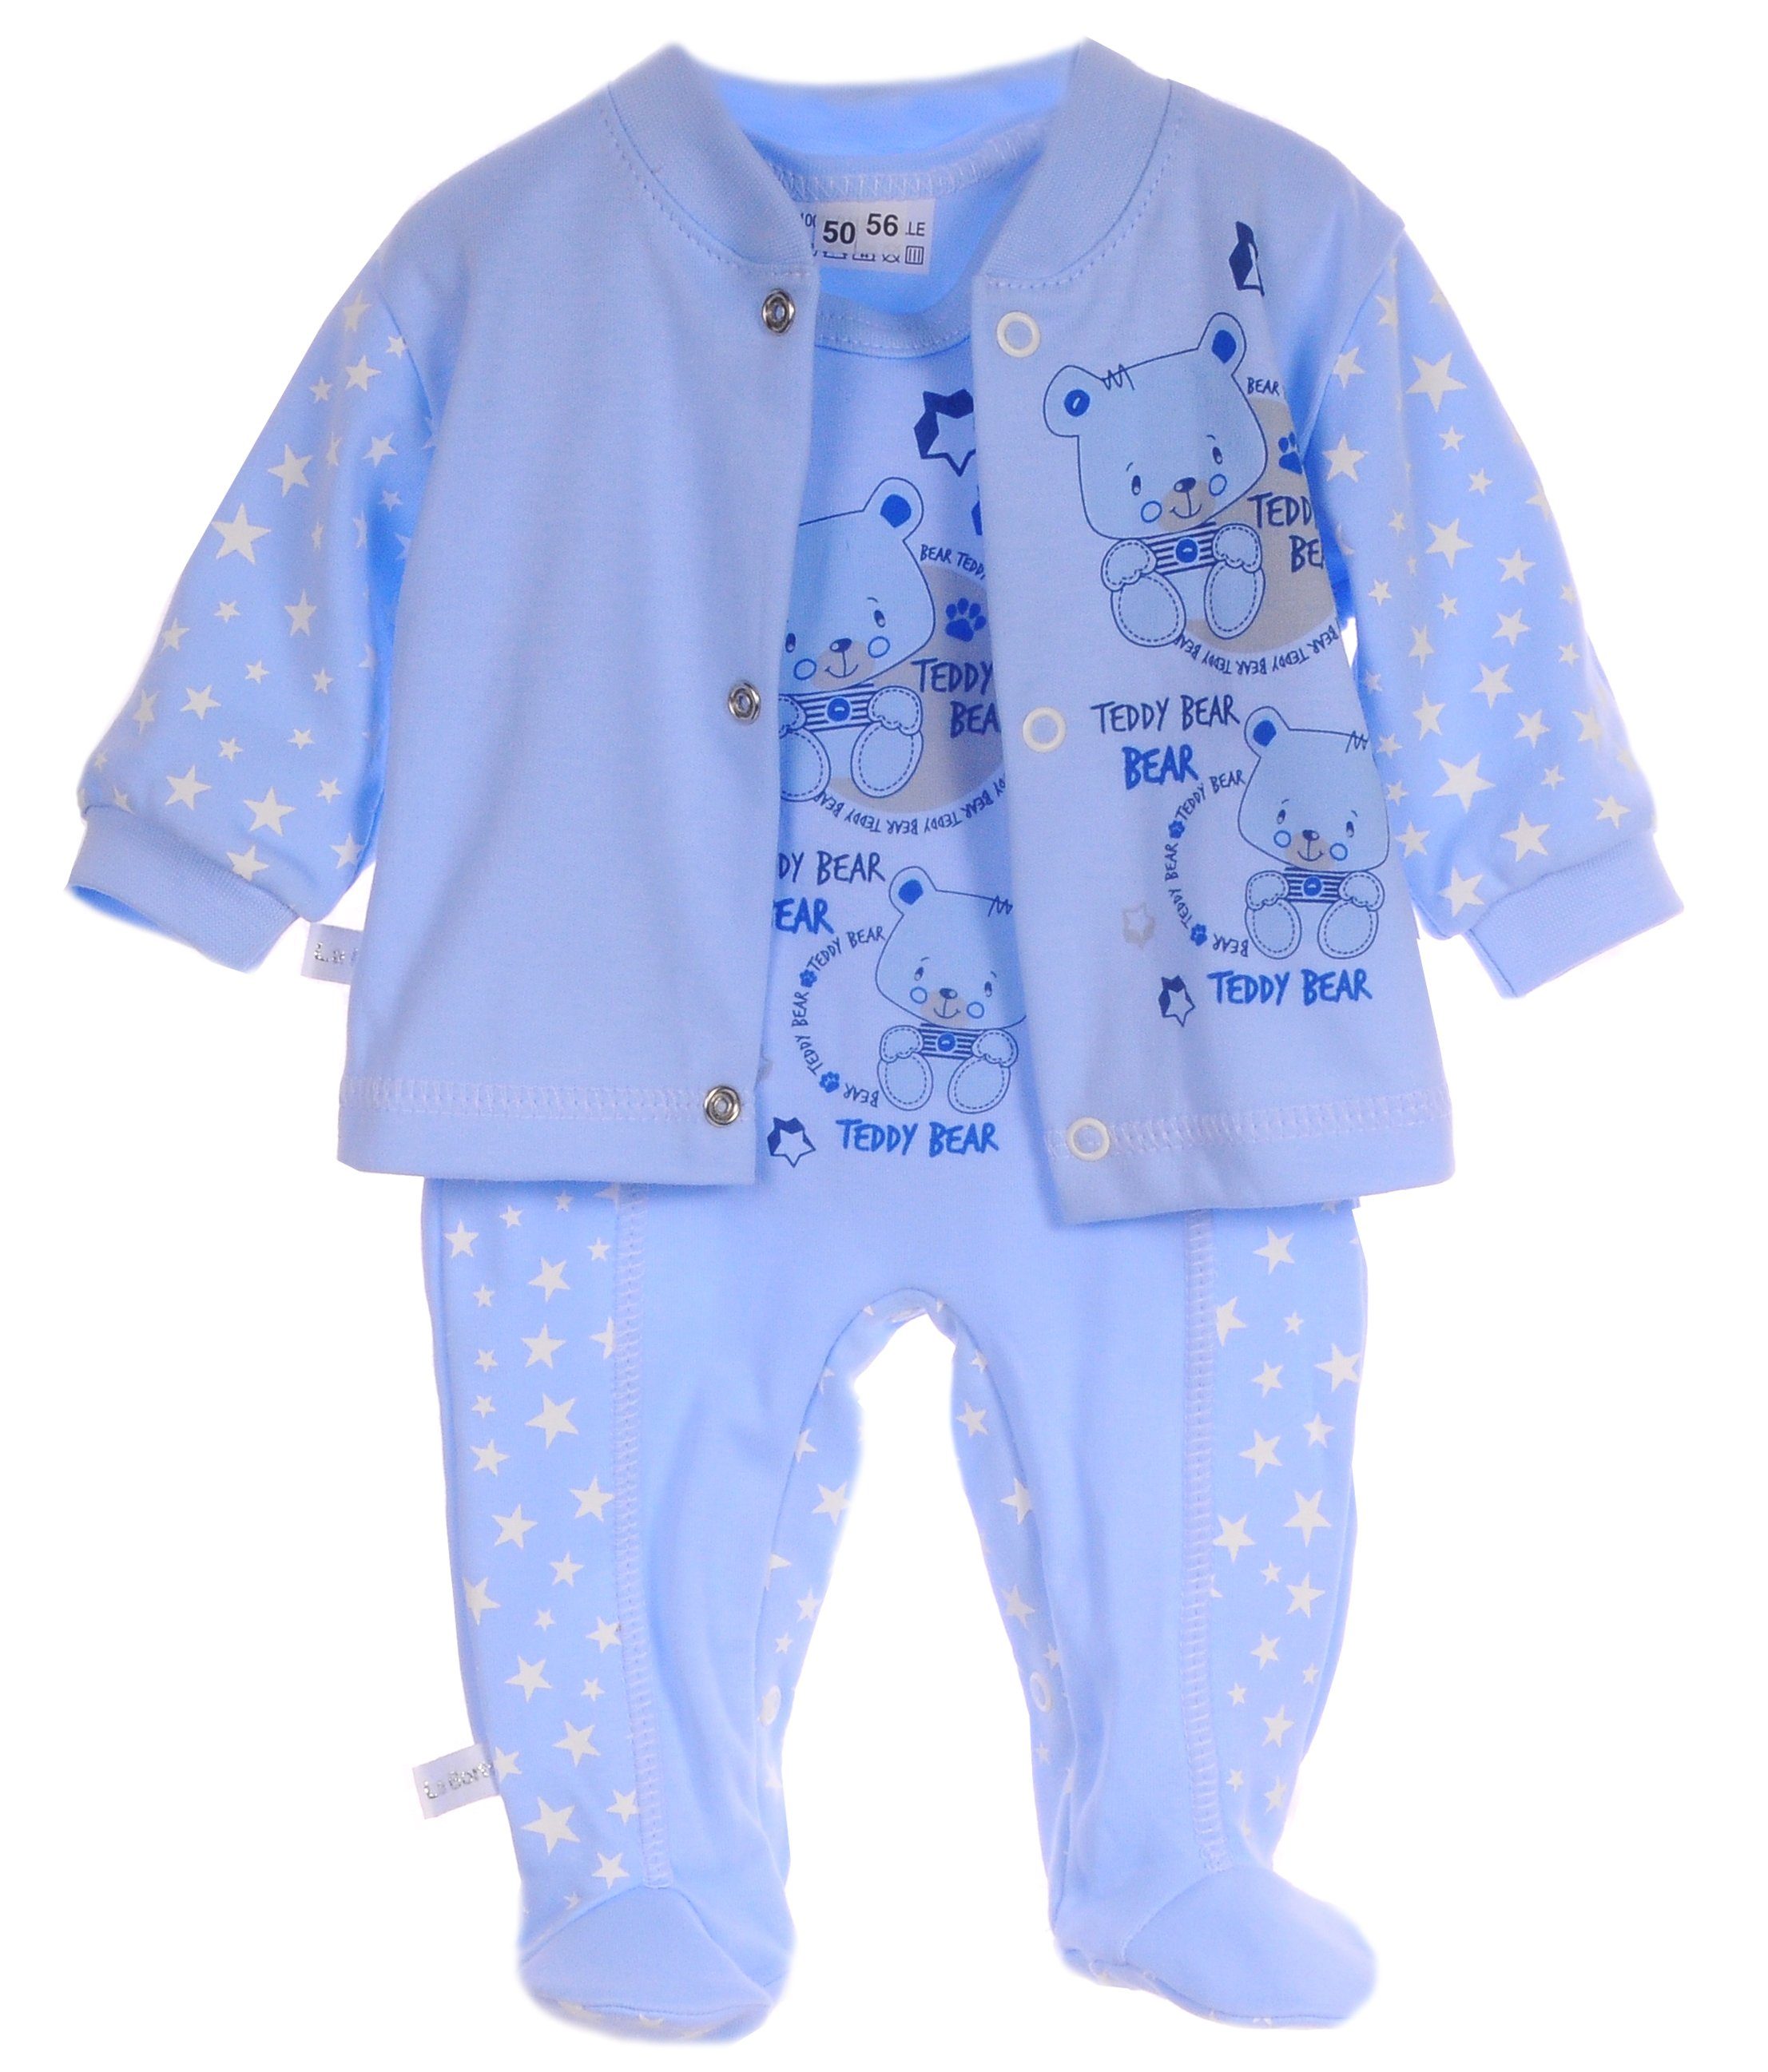 La Bortini Strampler Strampler und Hemdchen Set Baby Anzug 50 56 62 68 74 | Strampler